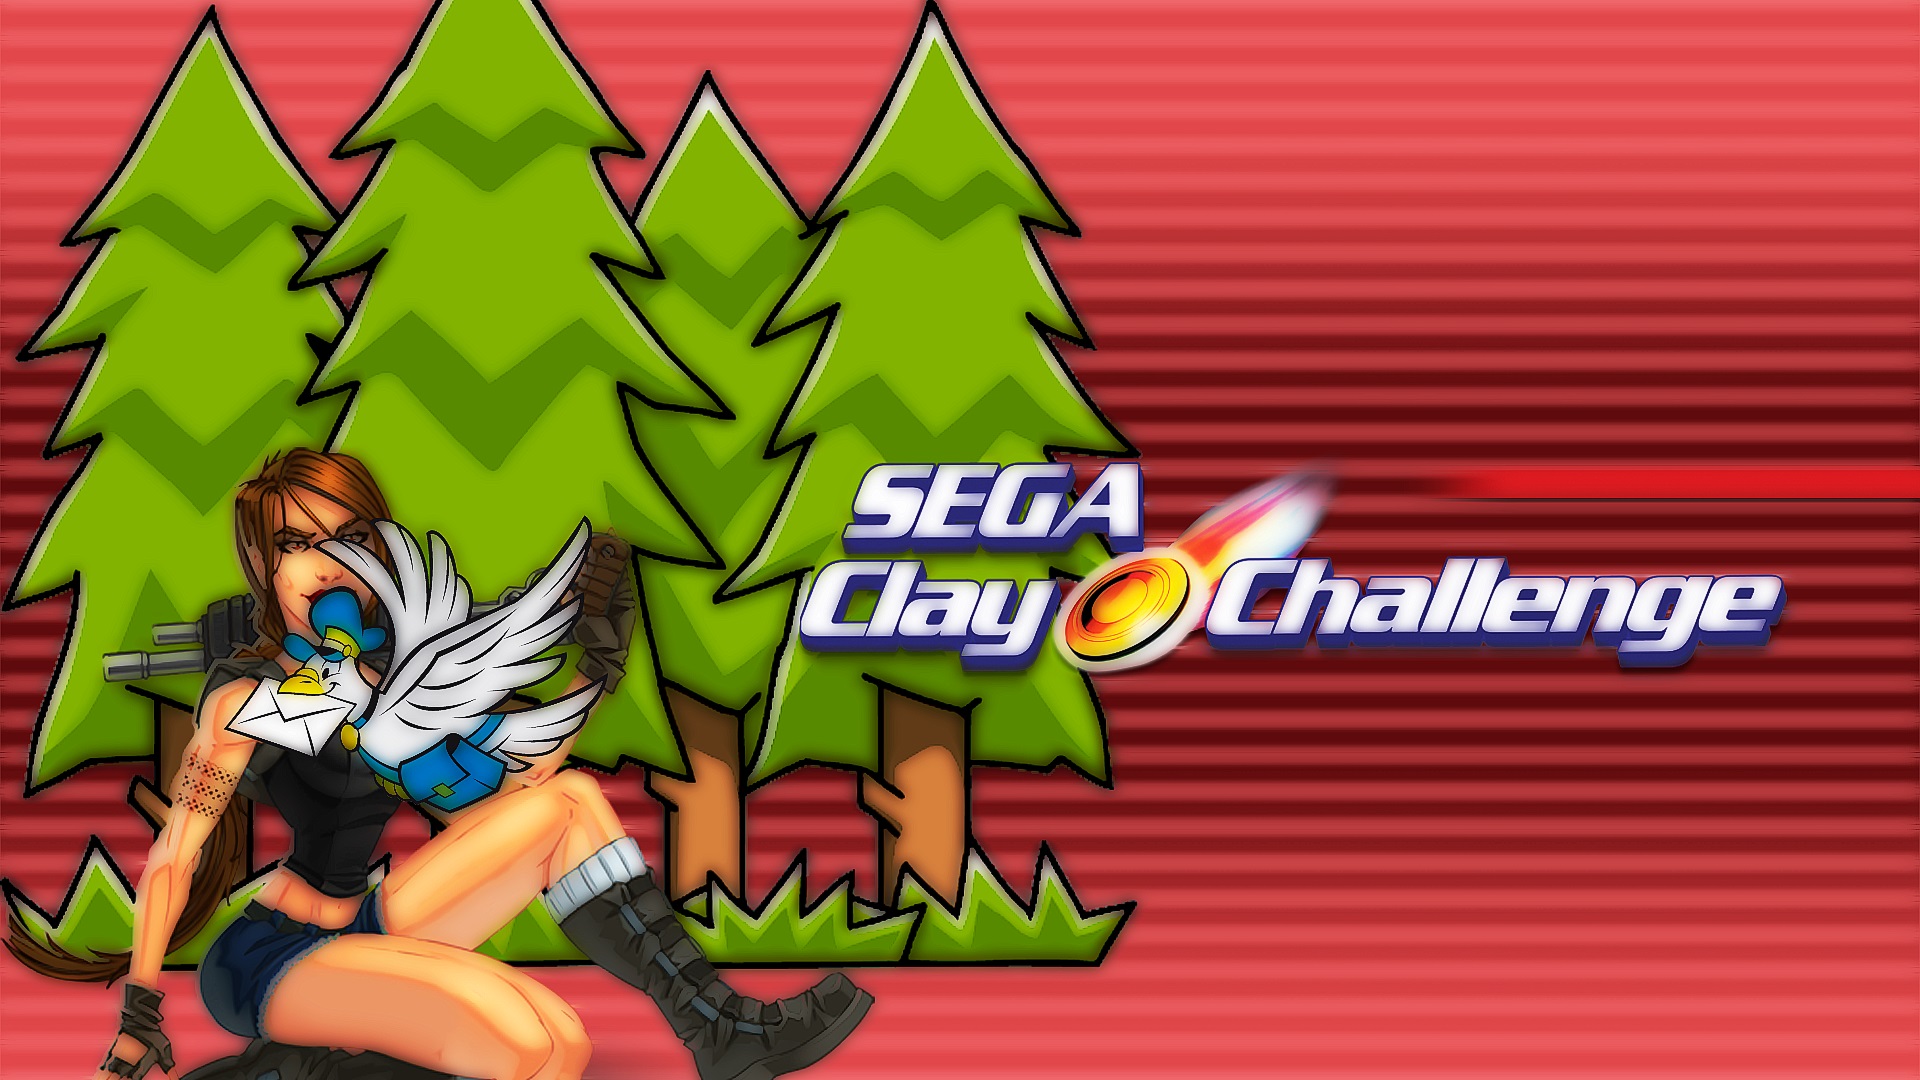 SEGA Clay Challenge